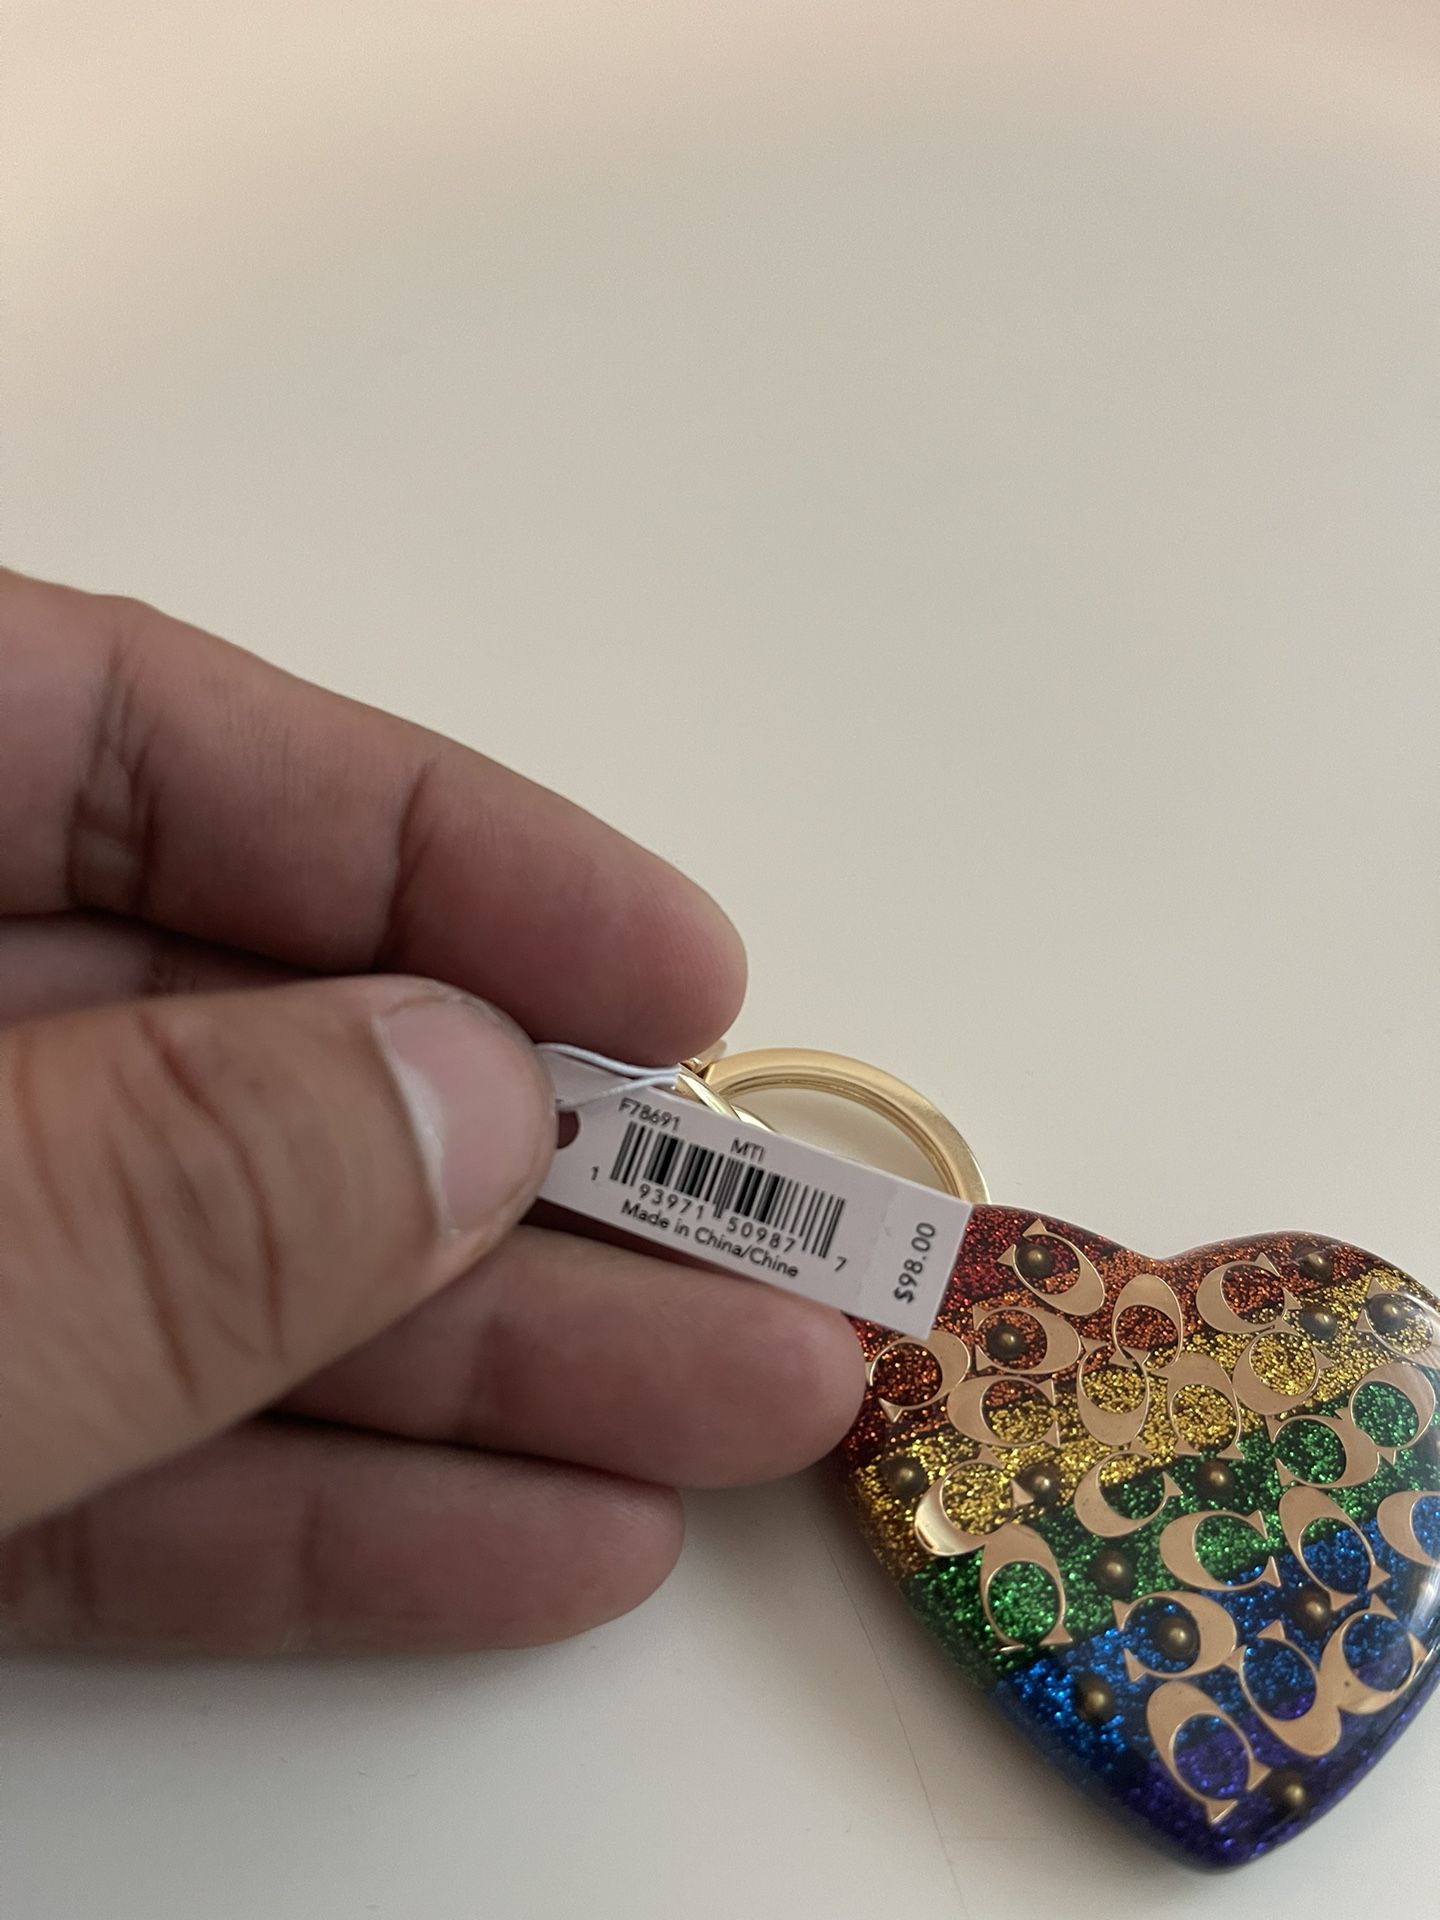 Coach Rainbow Pride Glitter Heart Charm Keychain Key Ring F78961 New With Tags